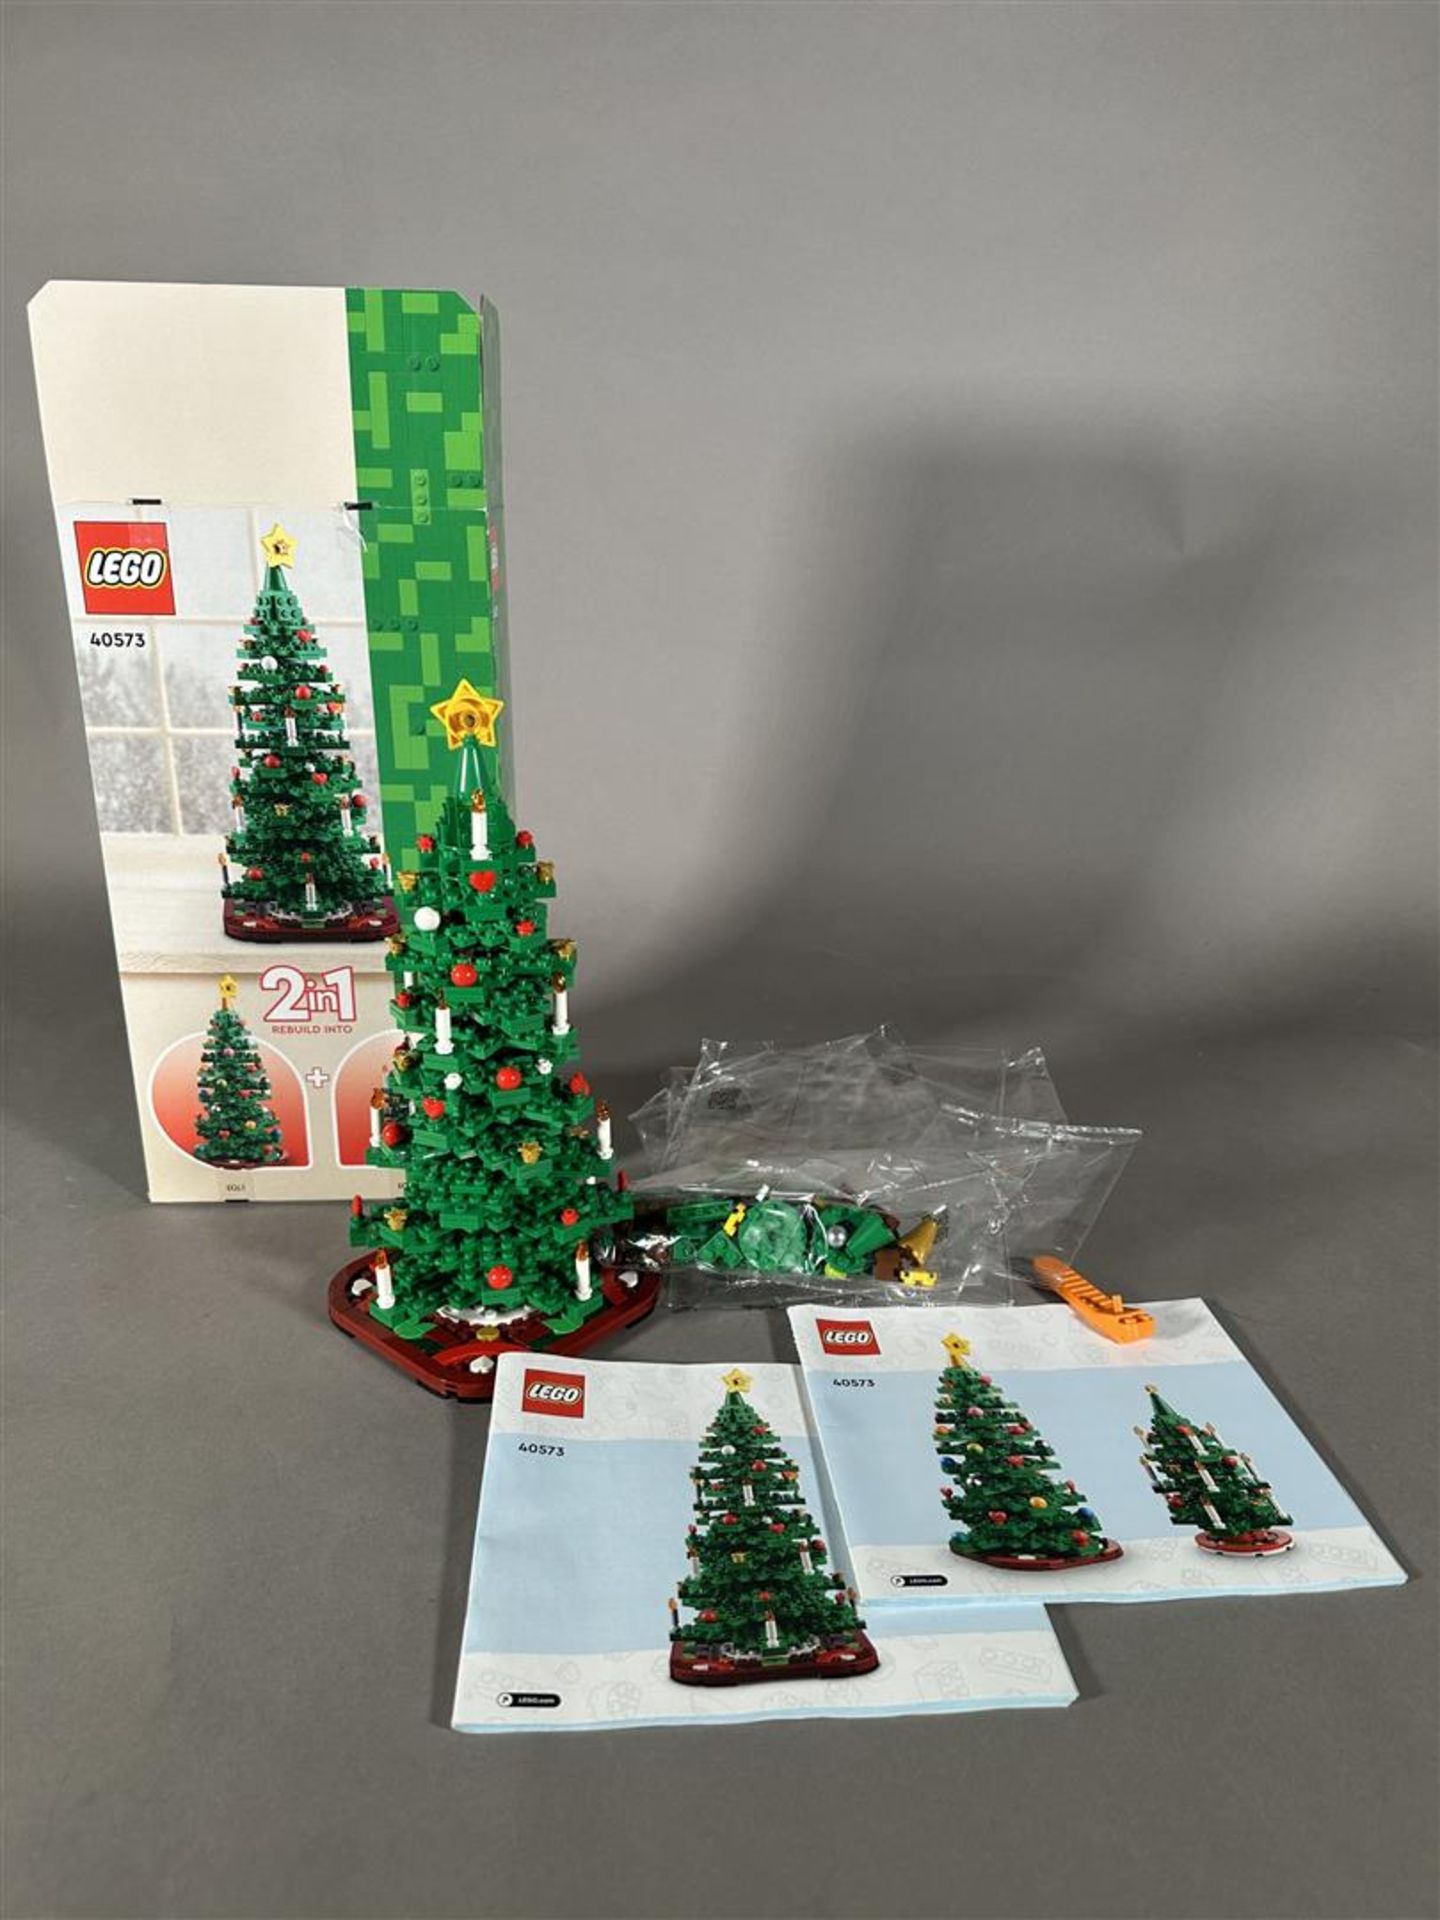 LEGO40573 - Christmas tree